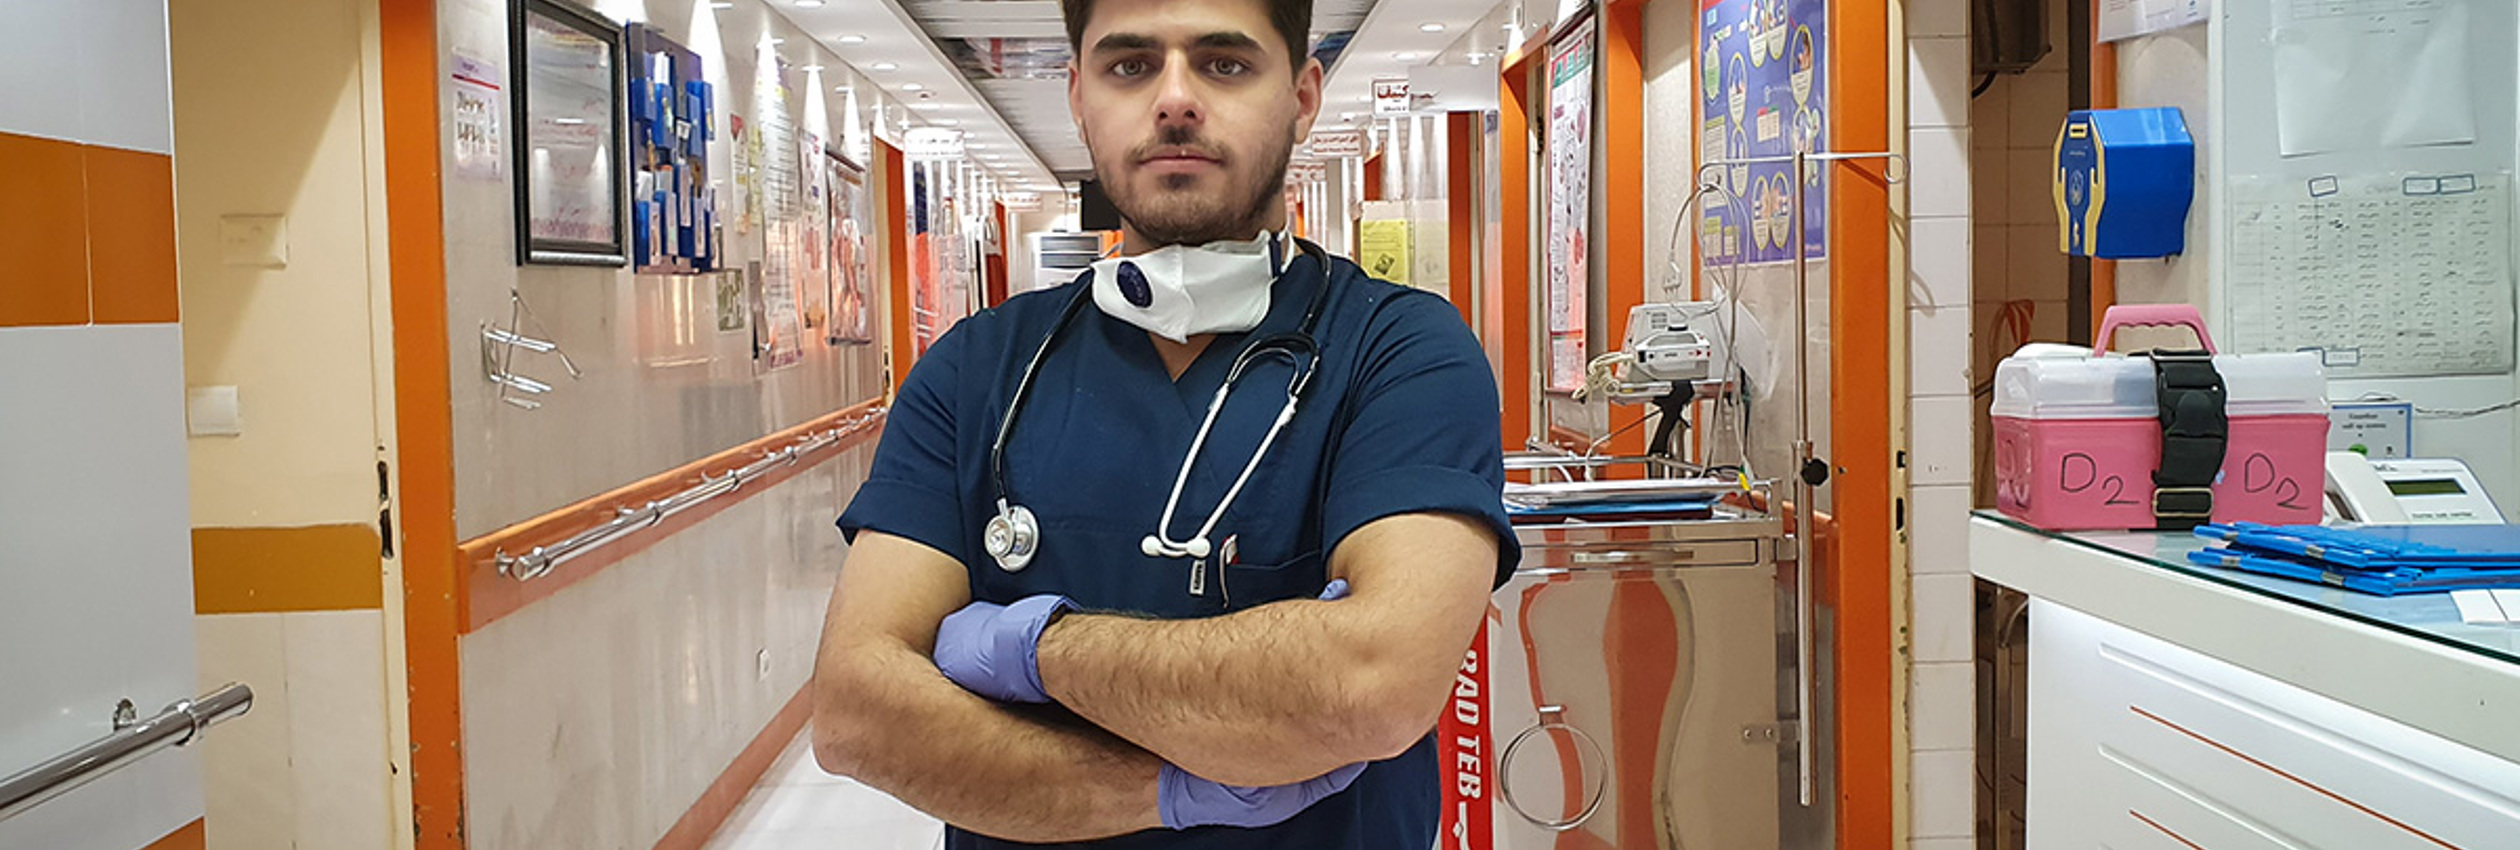 Moheyman Alkhatavi is a Iraqi refugee nurse working in Iran